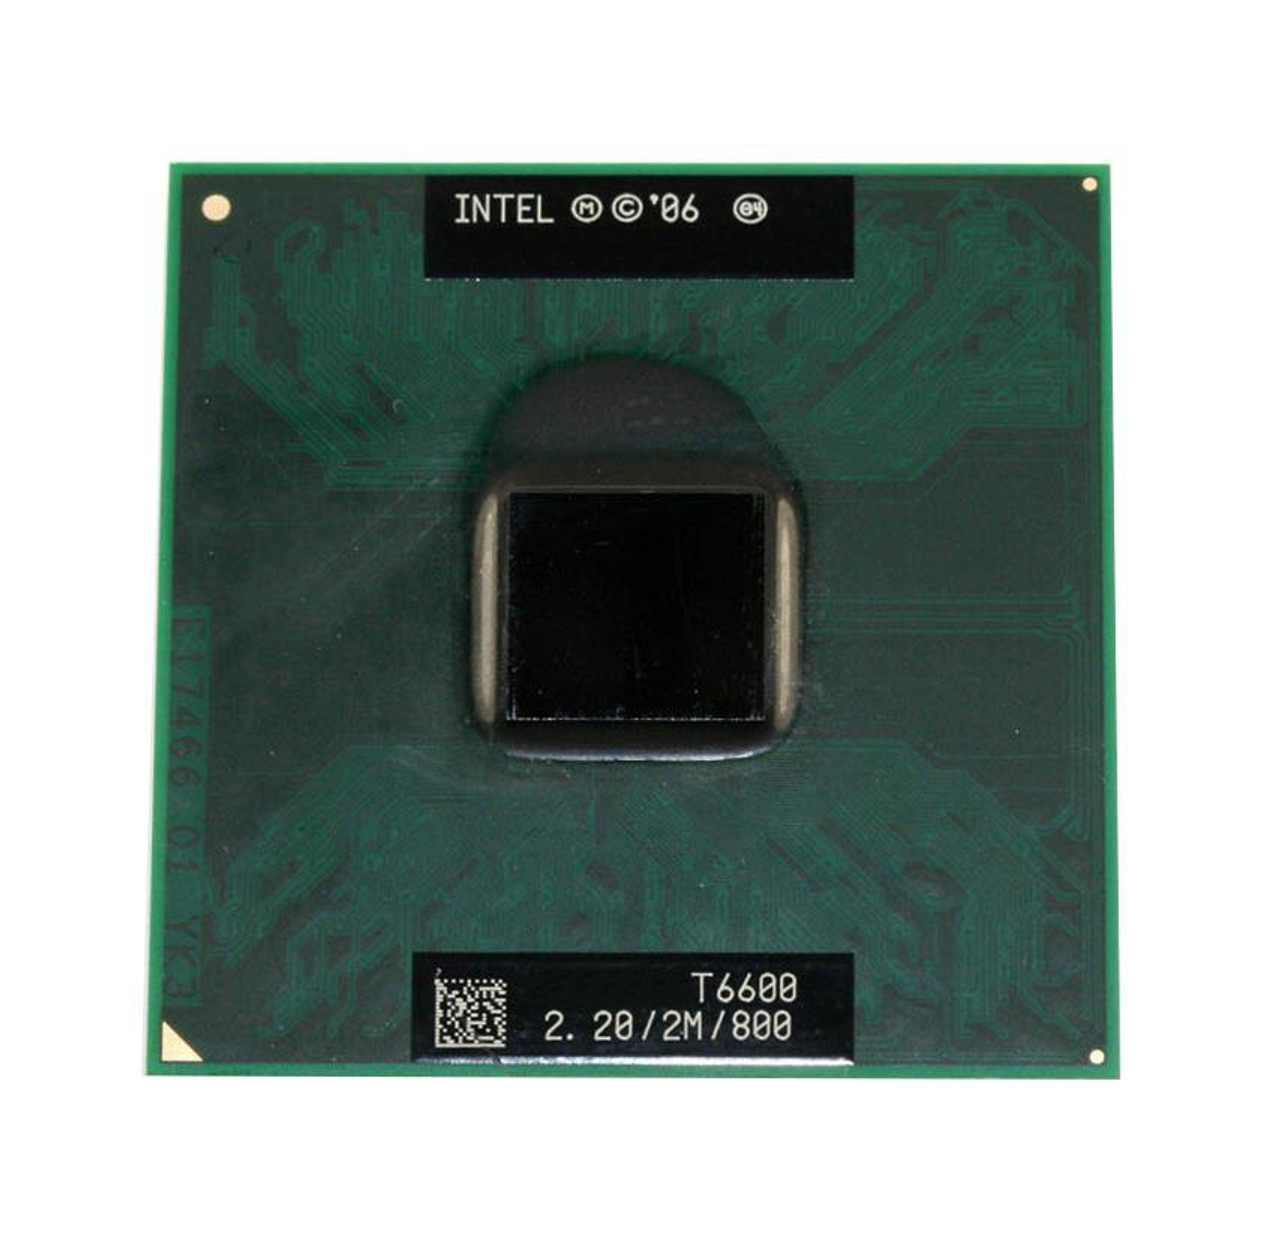 Intel Core 2 Duo T6600 2.20GHz 800MHz FSB 2MB L2 Cache Socket PGA478 Mobile Processor